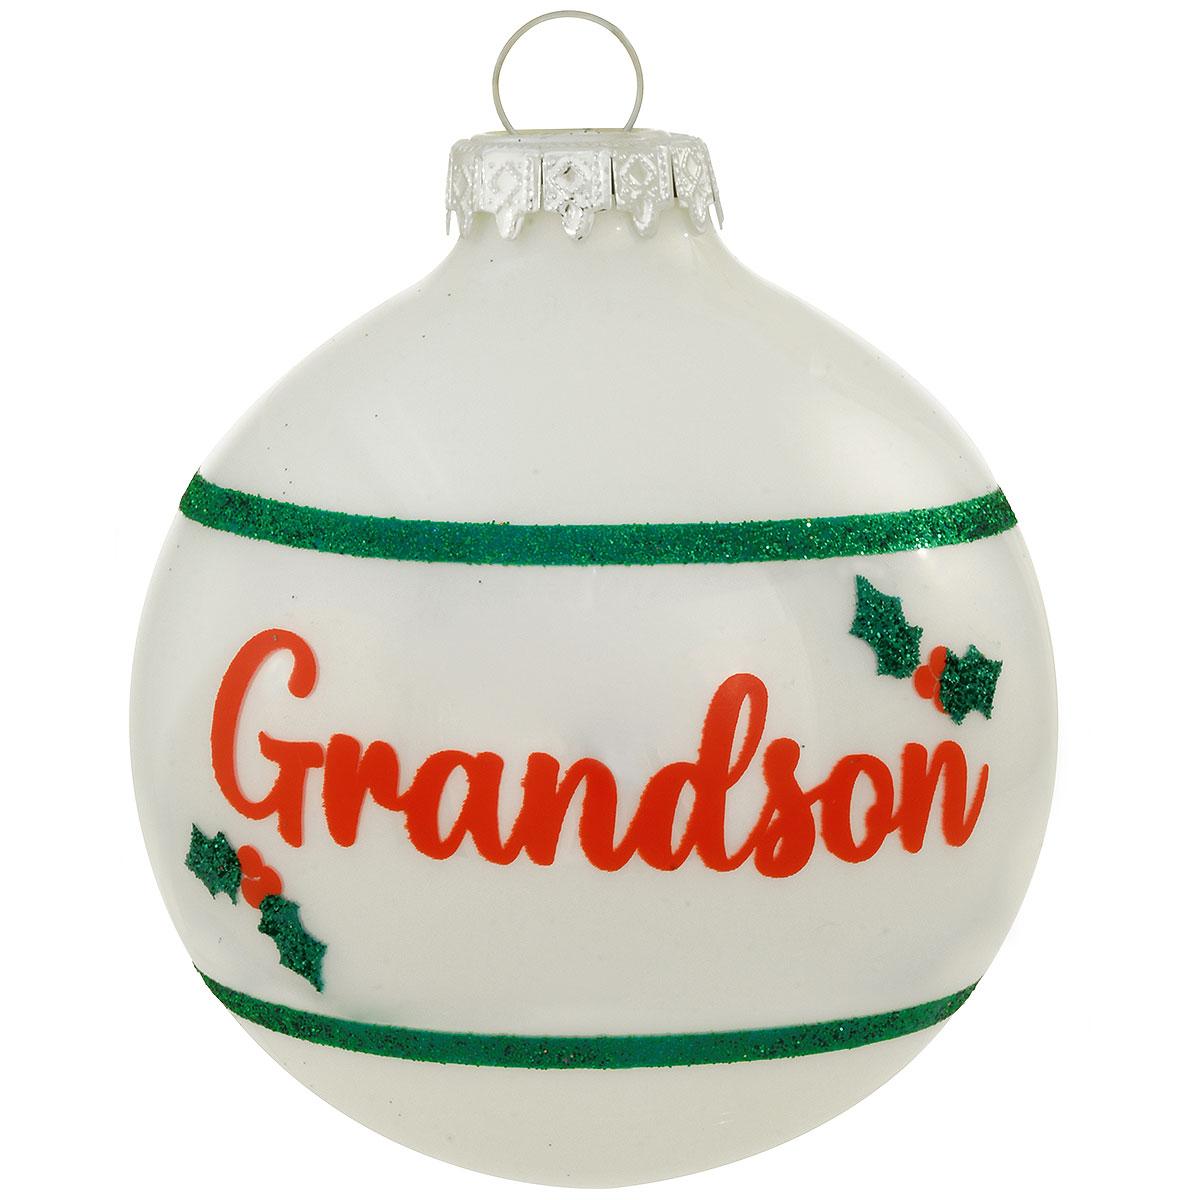 Grandson Glass Ornament